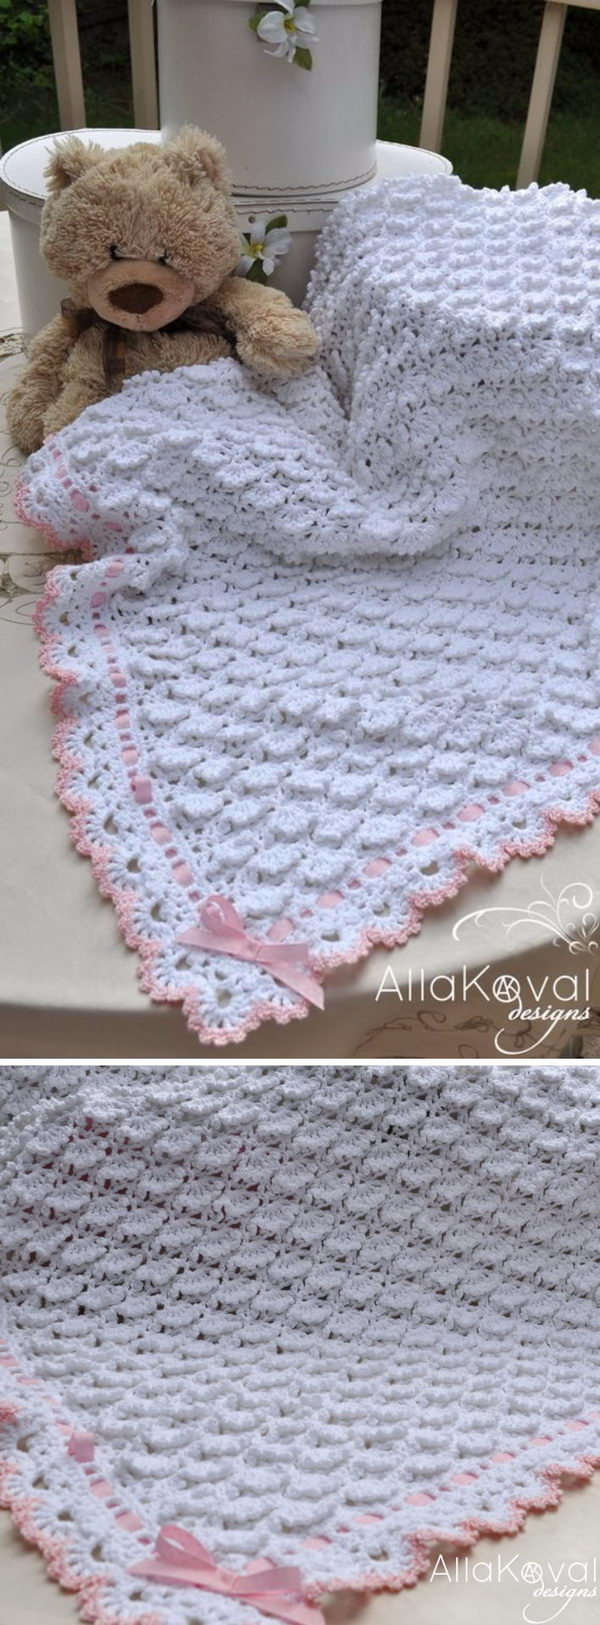 Free Crochet Baby Patterns 30 Free Crochet Patterns For Blankets Hative